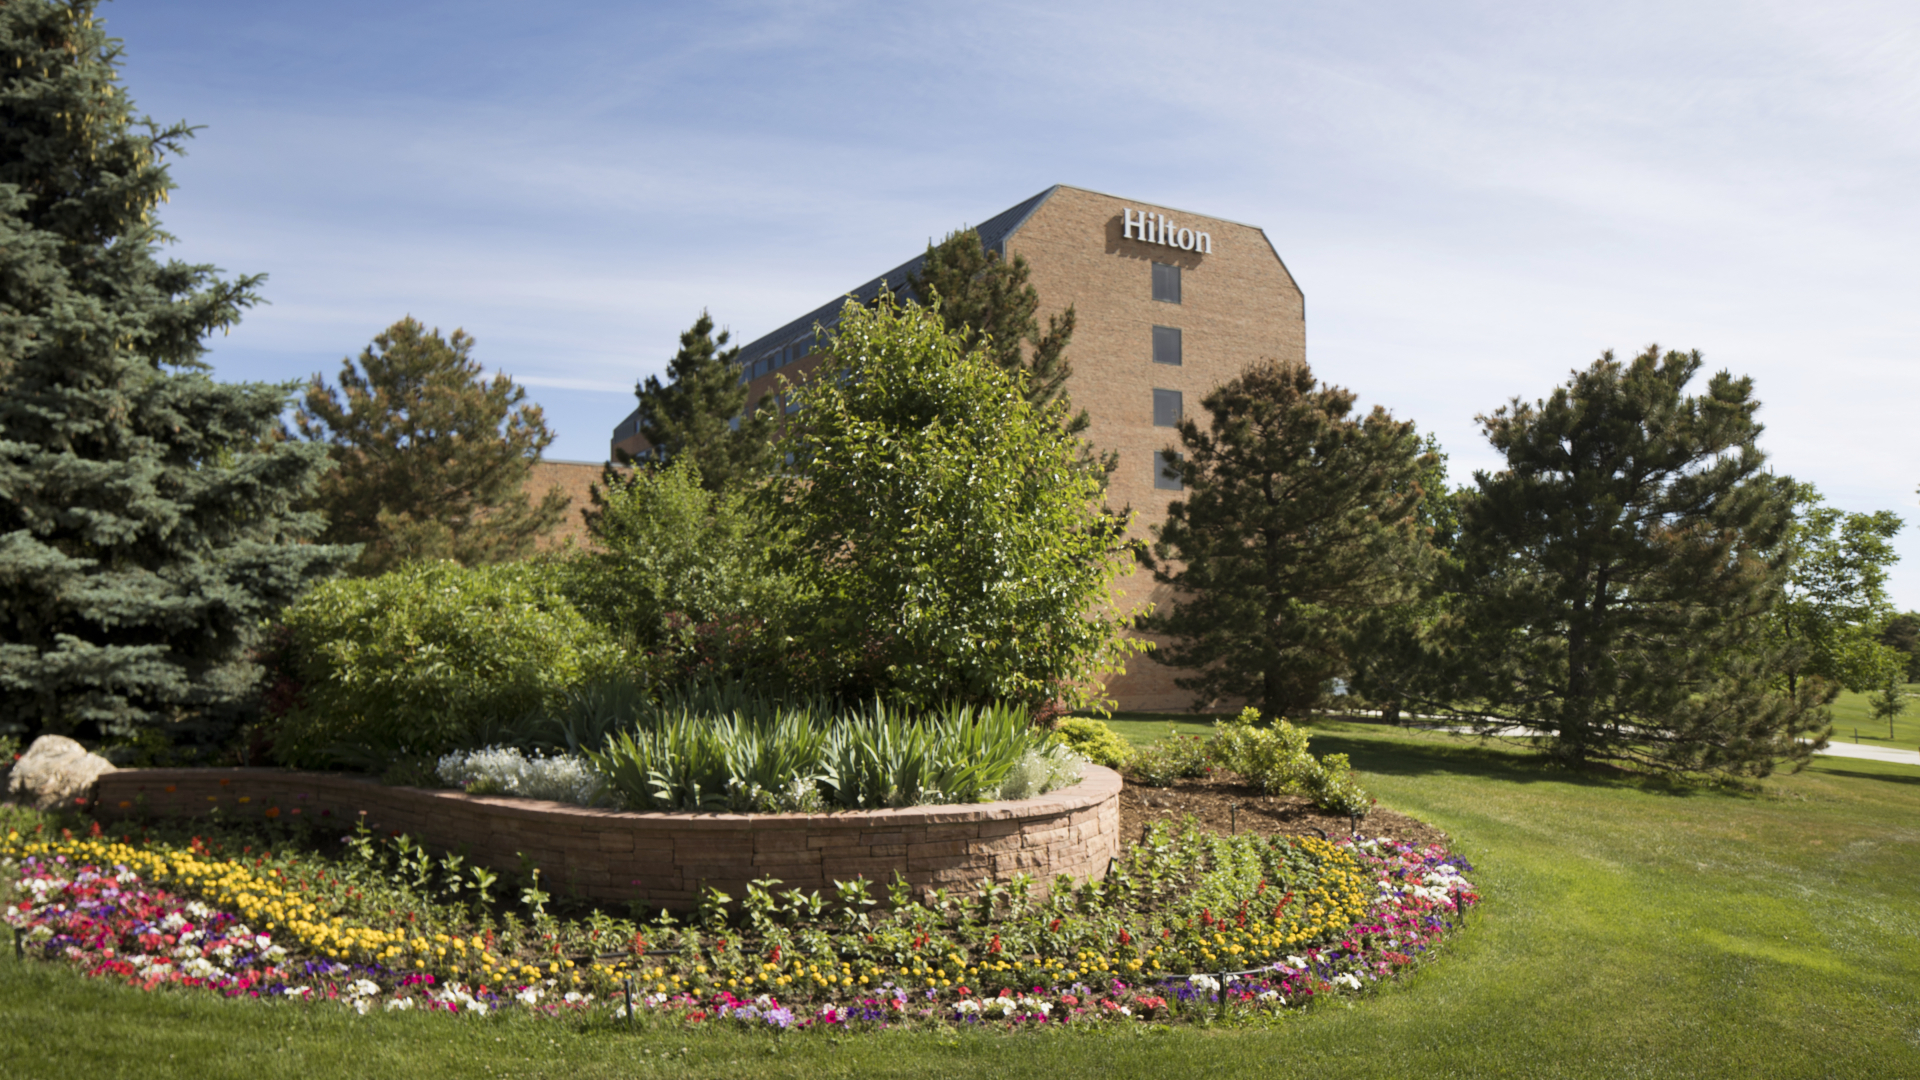 Photo of Hilton Denver Inverness, Englewood, CO